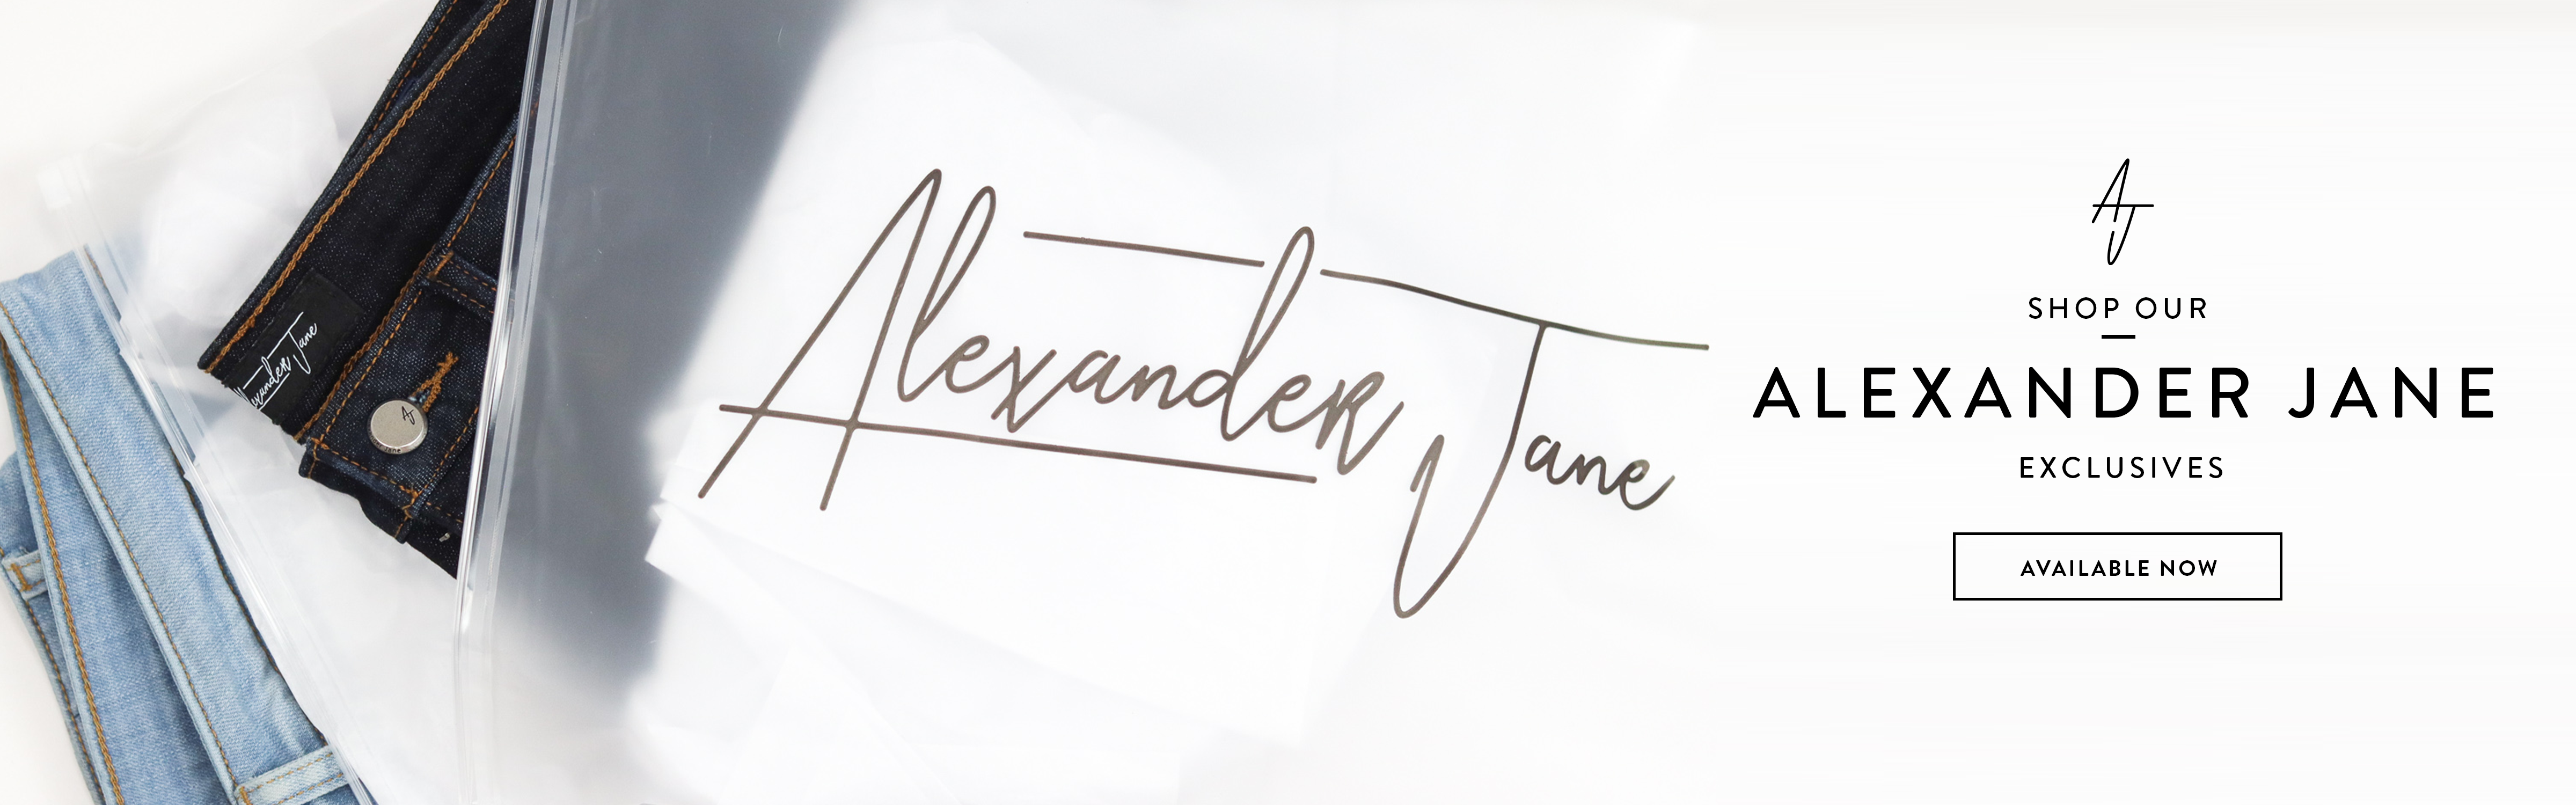 Alexander Jane Boutique